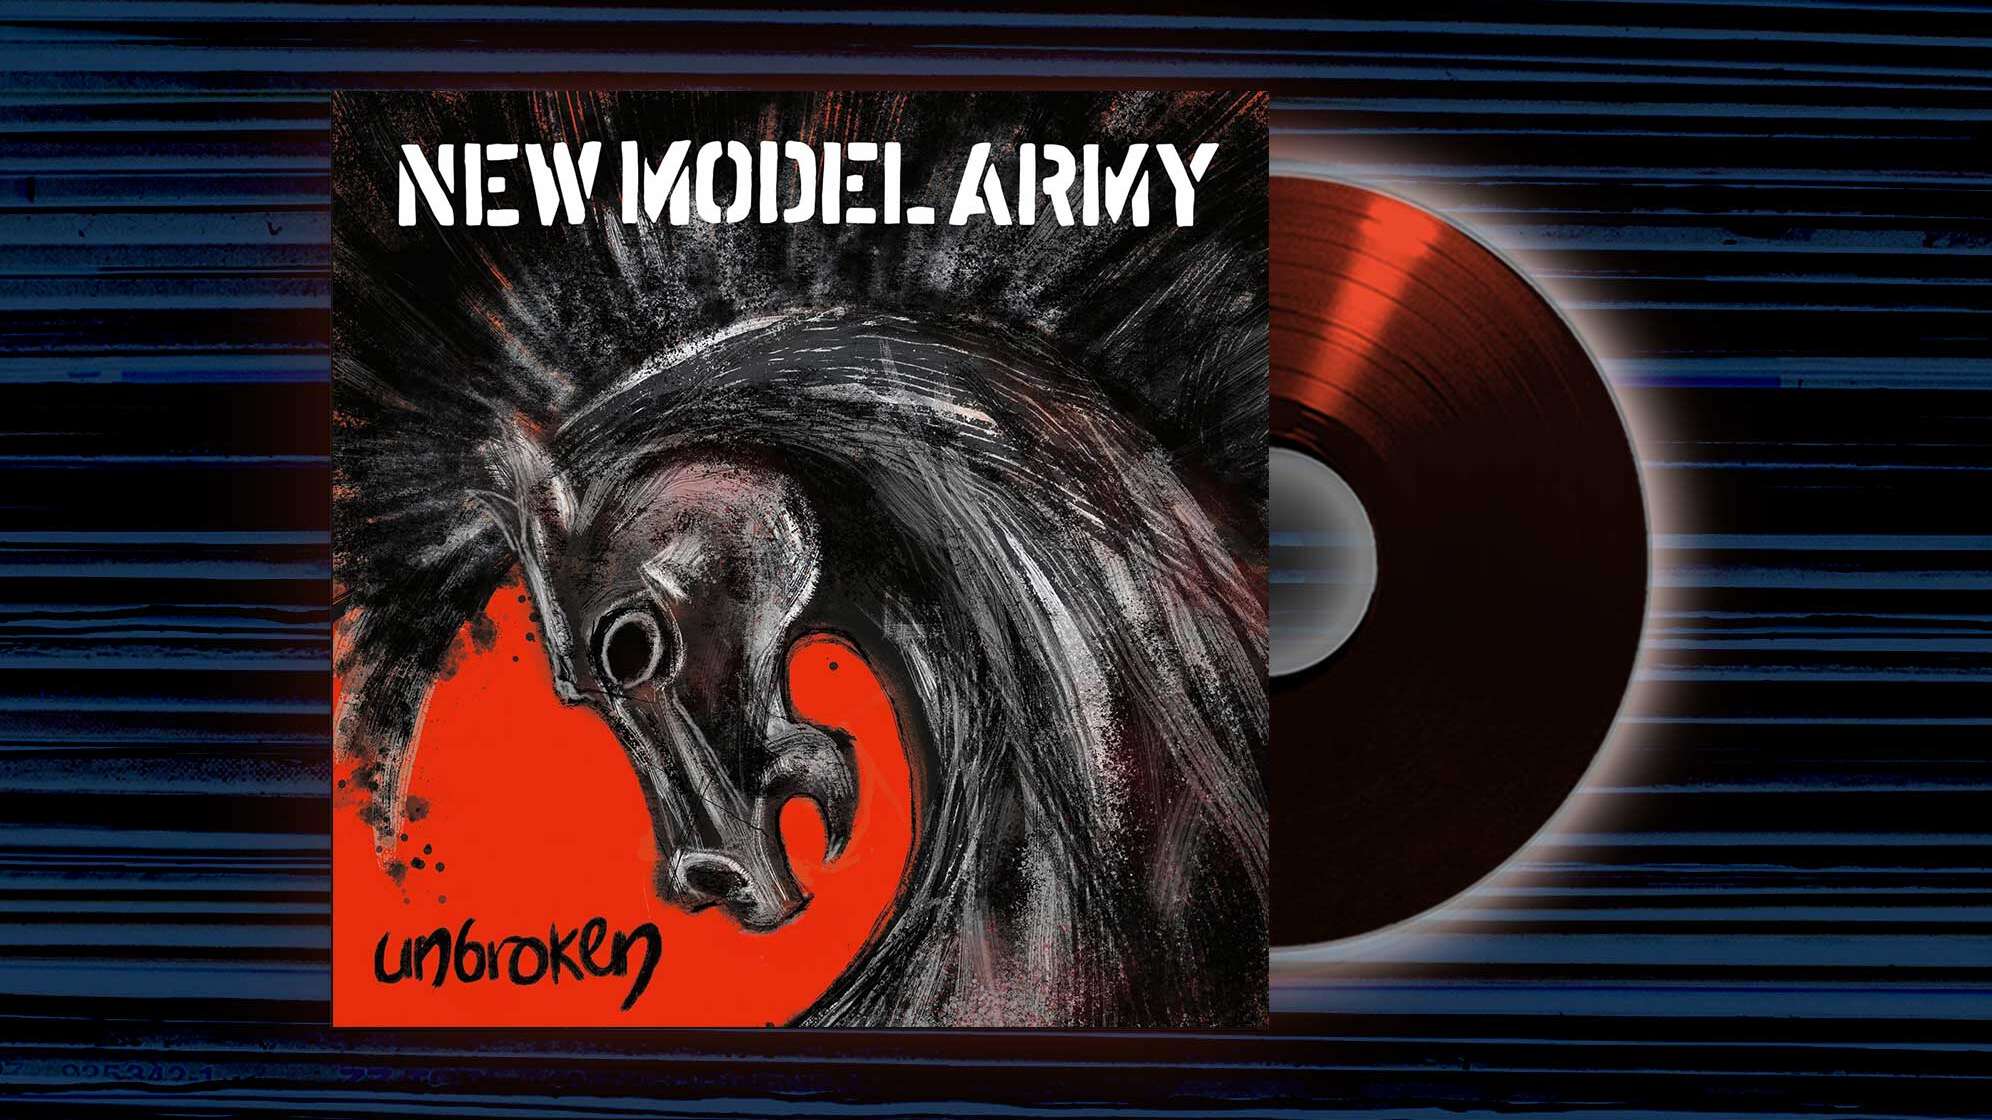 Das Albumcover von New Model Army